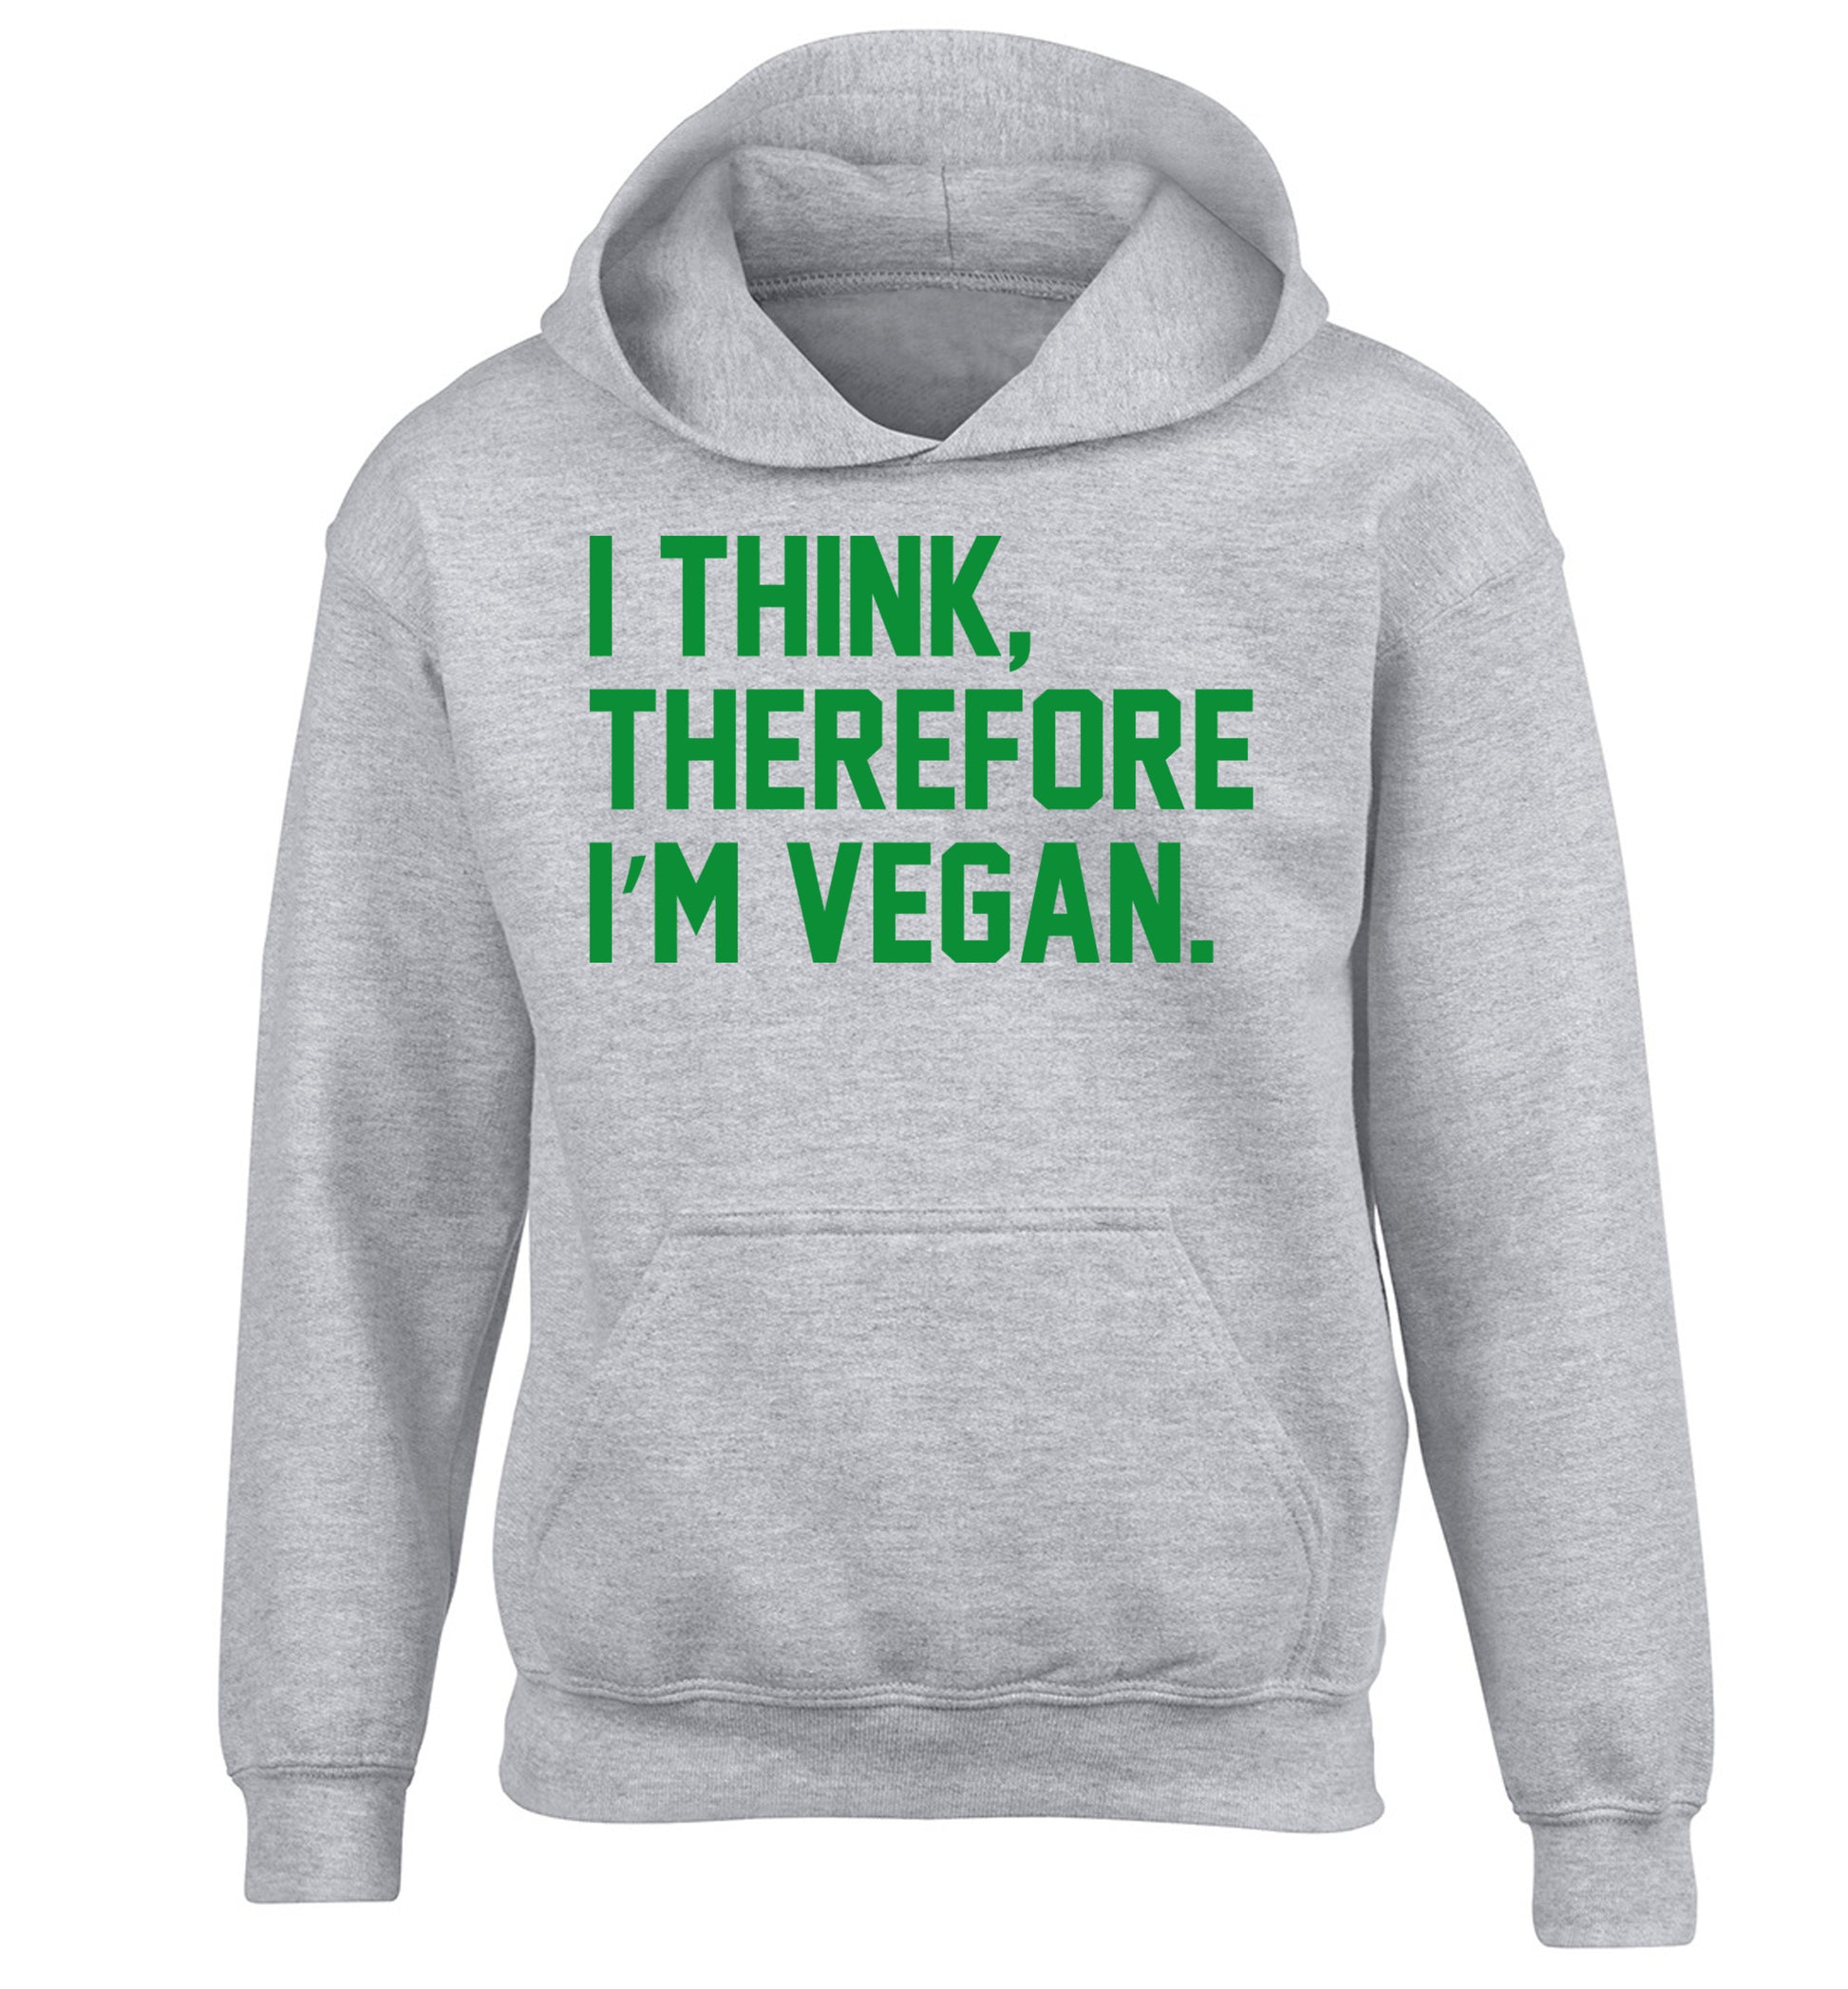 I think therefore I'm vegan children's grey hoodie 12-14 Years